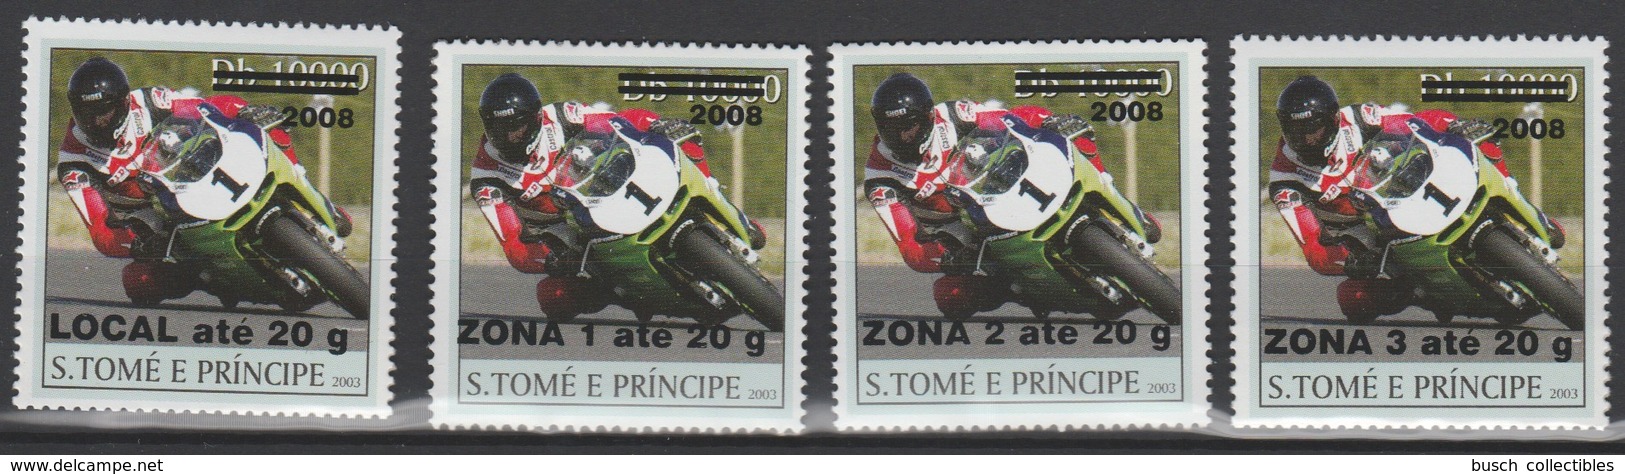 Sao S. Tomé & Principe 2008 / 2009 Mi. 4009-4015 Motorbike Motorrad Moto 4 Val. - Motorbikes